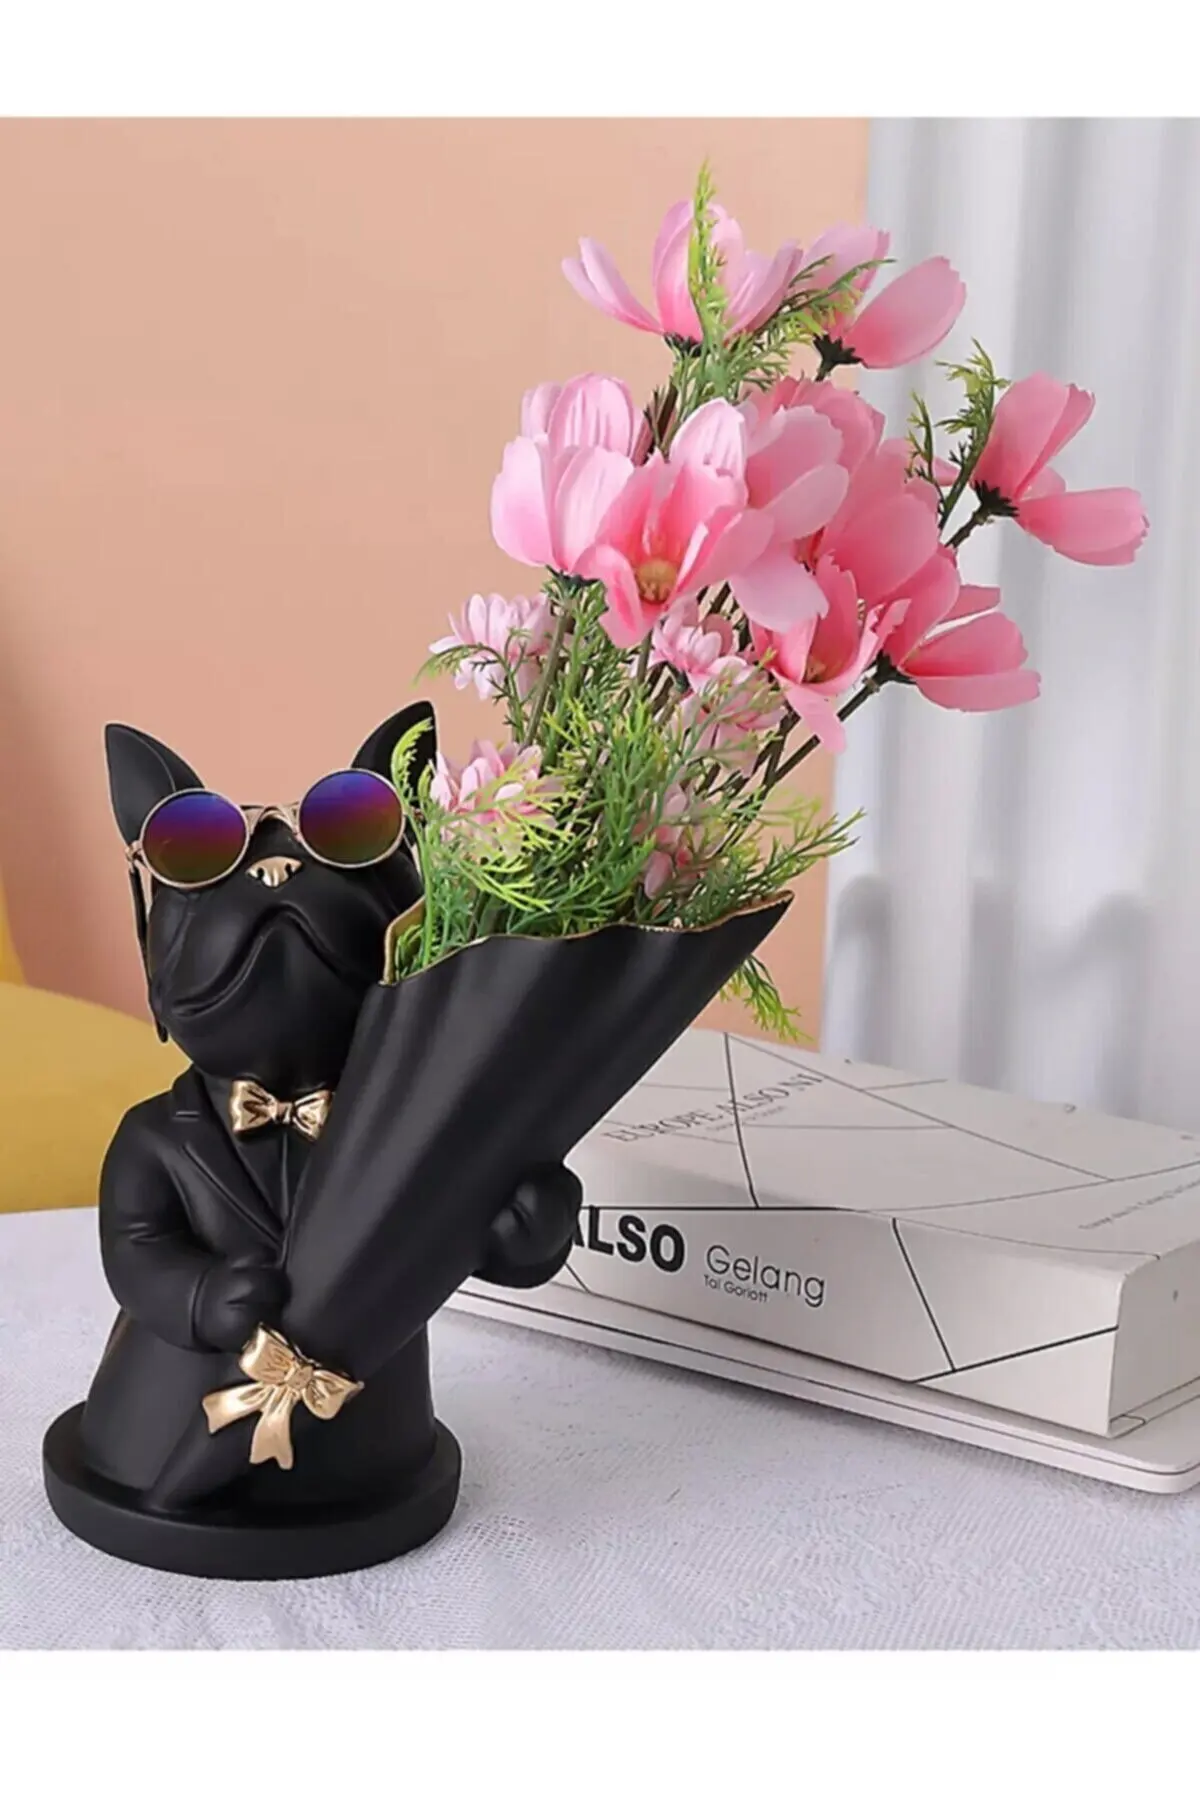 

Bulldog Dog Decorative Sculpture Desktop Flower Pot Vase Table Decoration Gift Size is 23cm wide 16cm